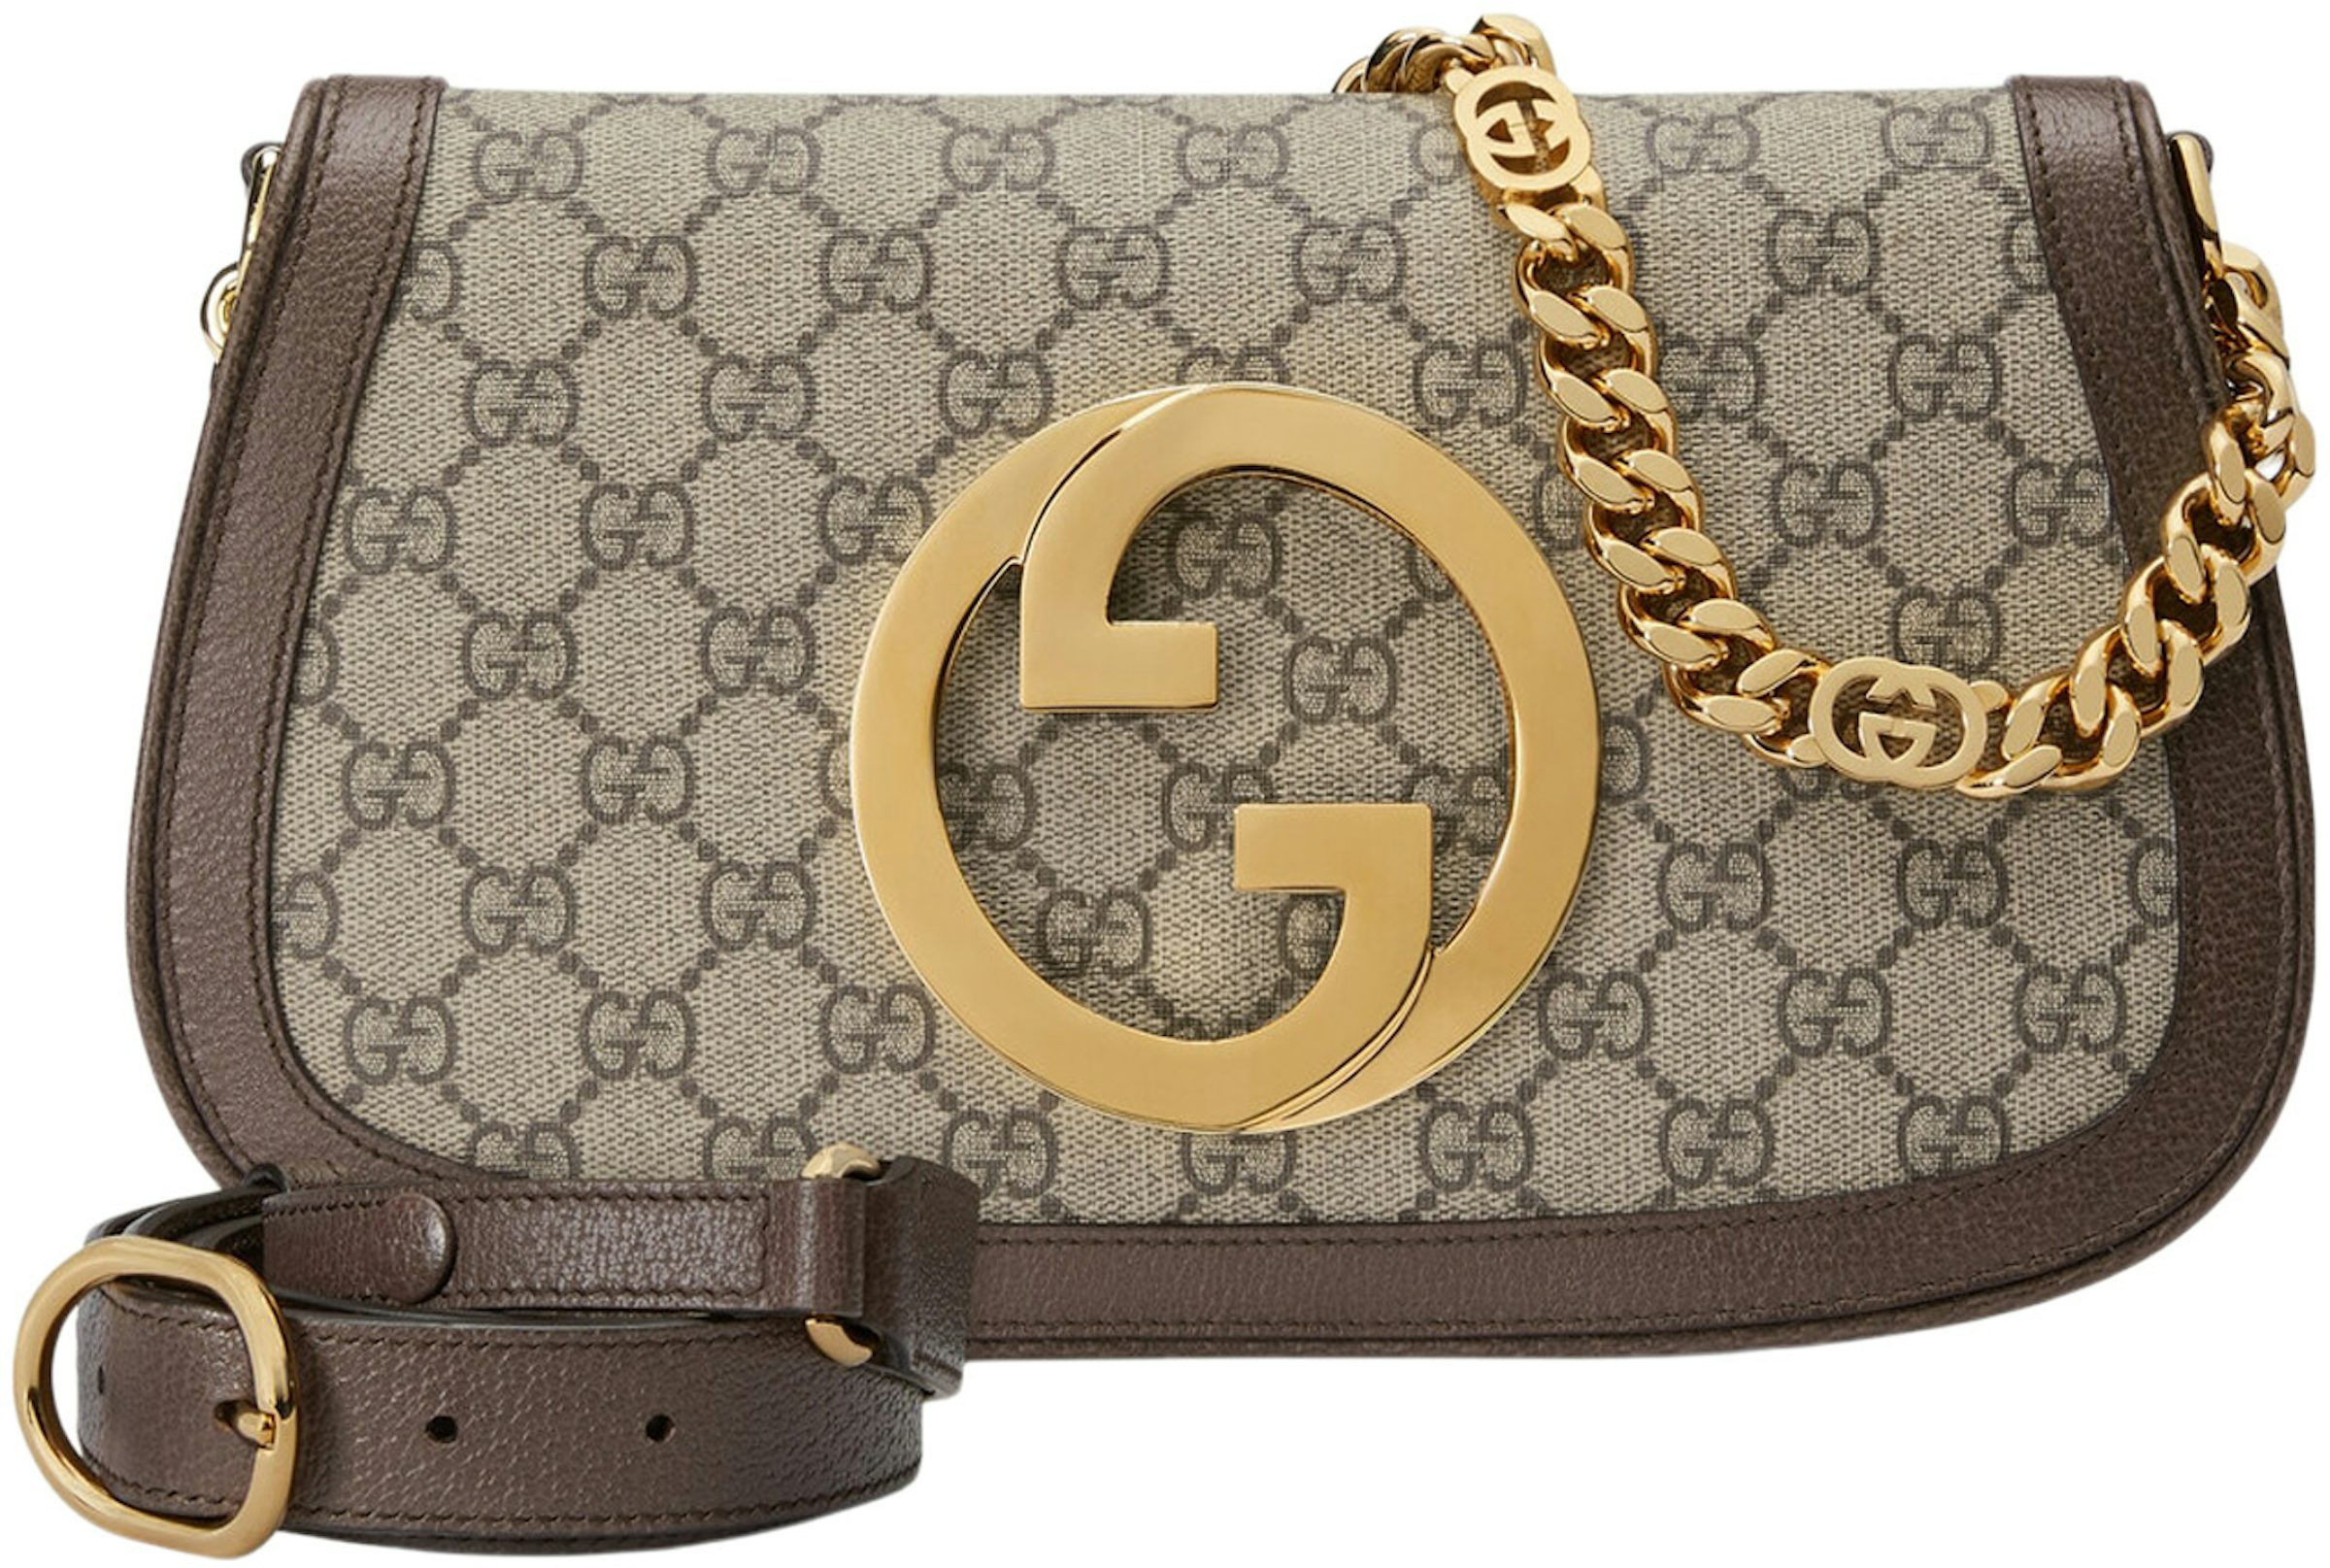 Gucci Attache medium shoulder bag in beige and ebony Supreme